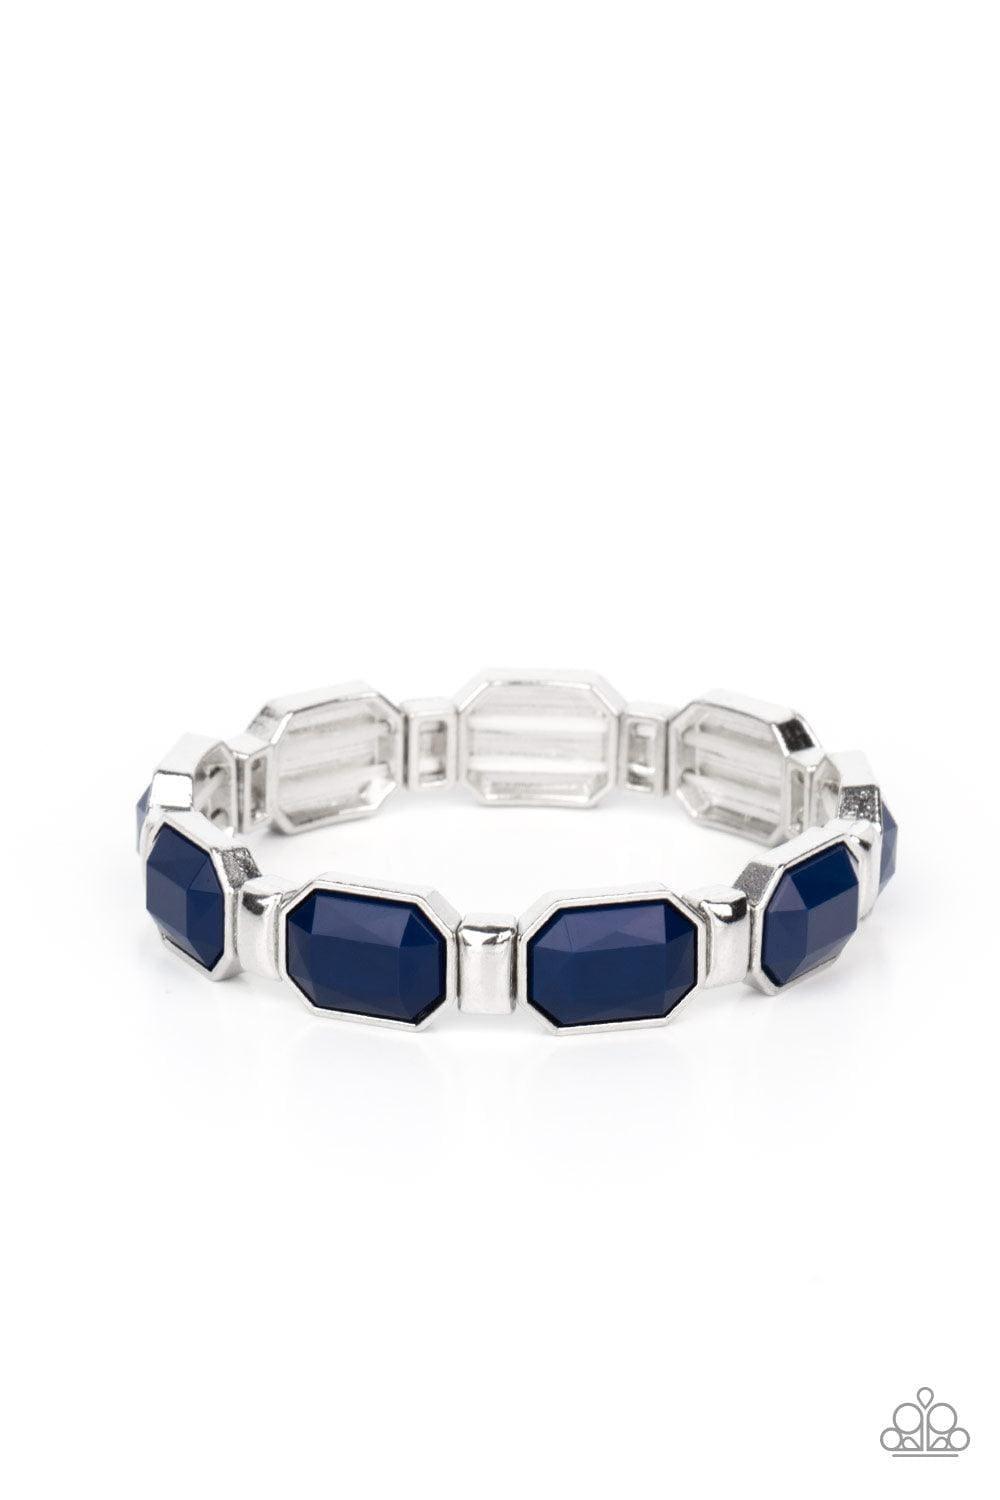 Paparazzi Accessories - Fashion Fable - Blue Bracelet - Bling by JessieK